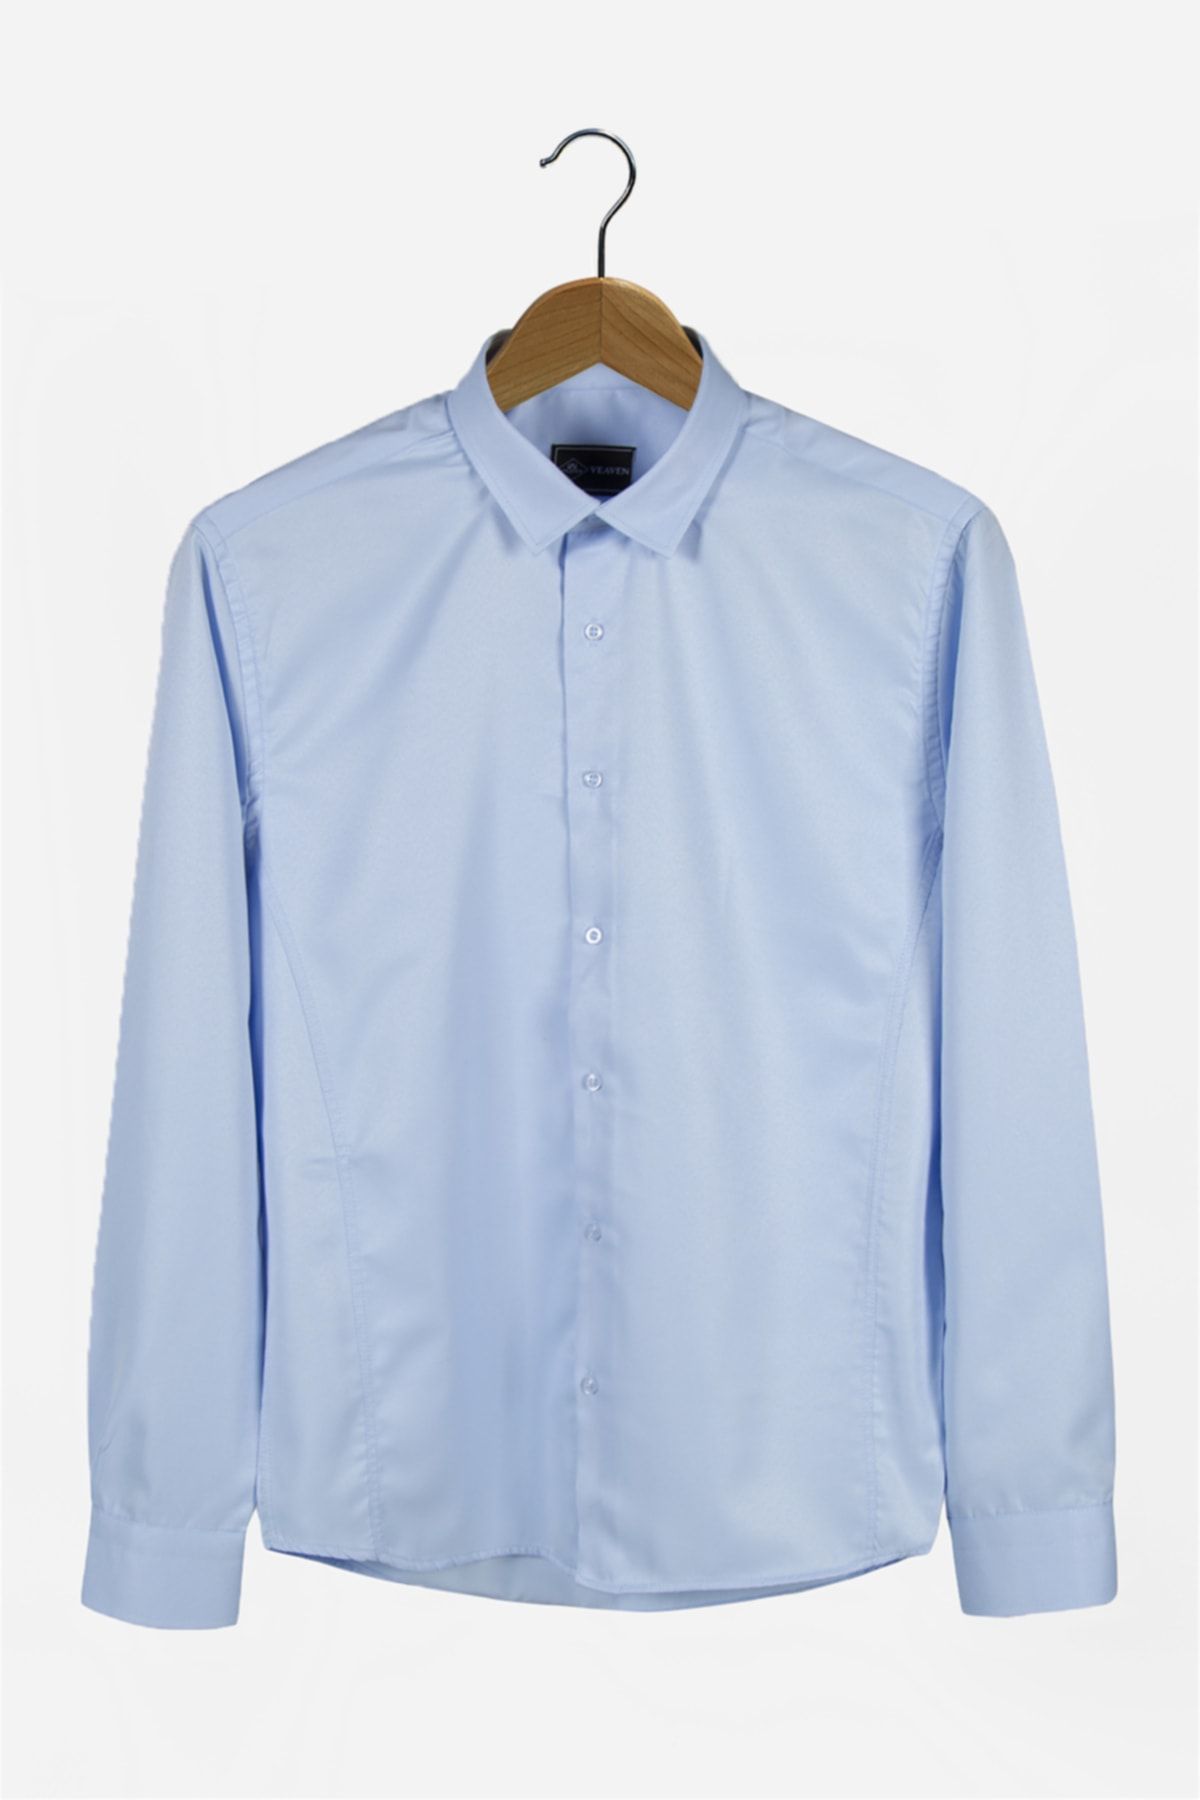 COLLIE Erkek Italyan Yaka Extra Slim Mavi Premium Klasik Gömlek